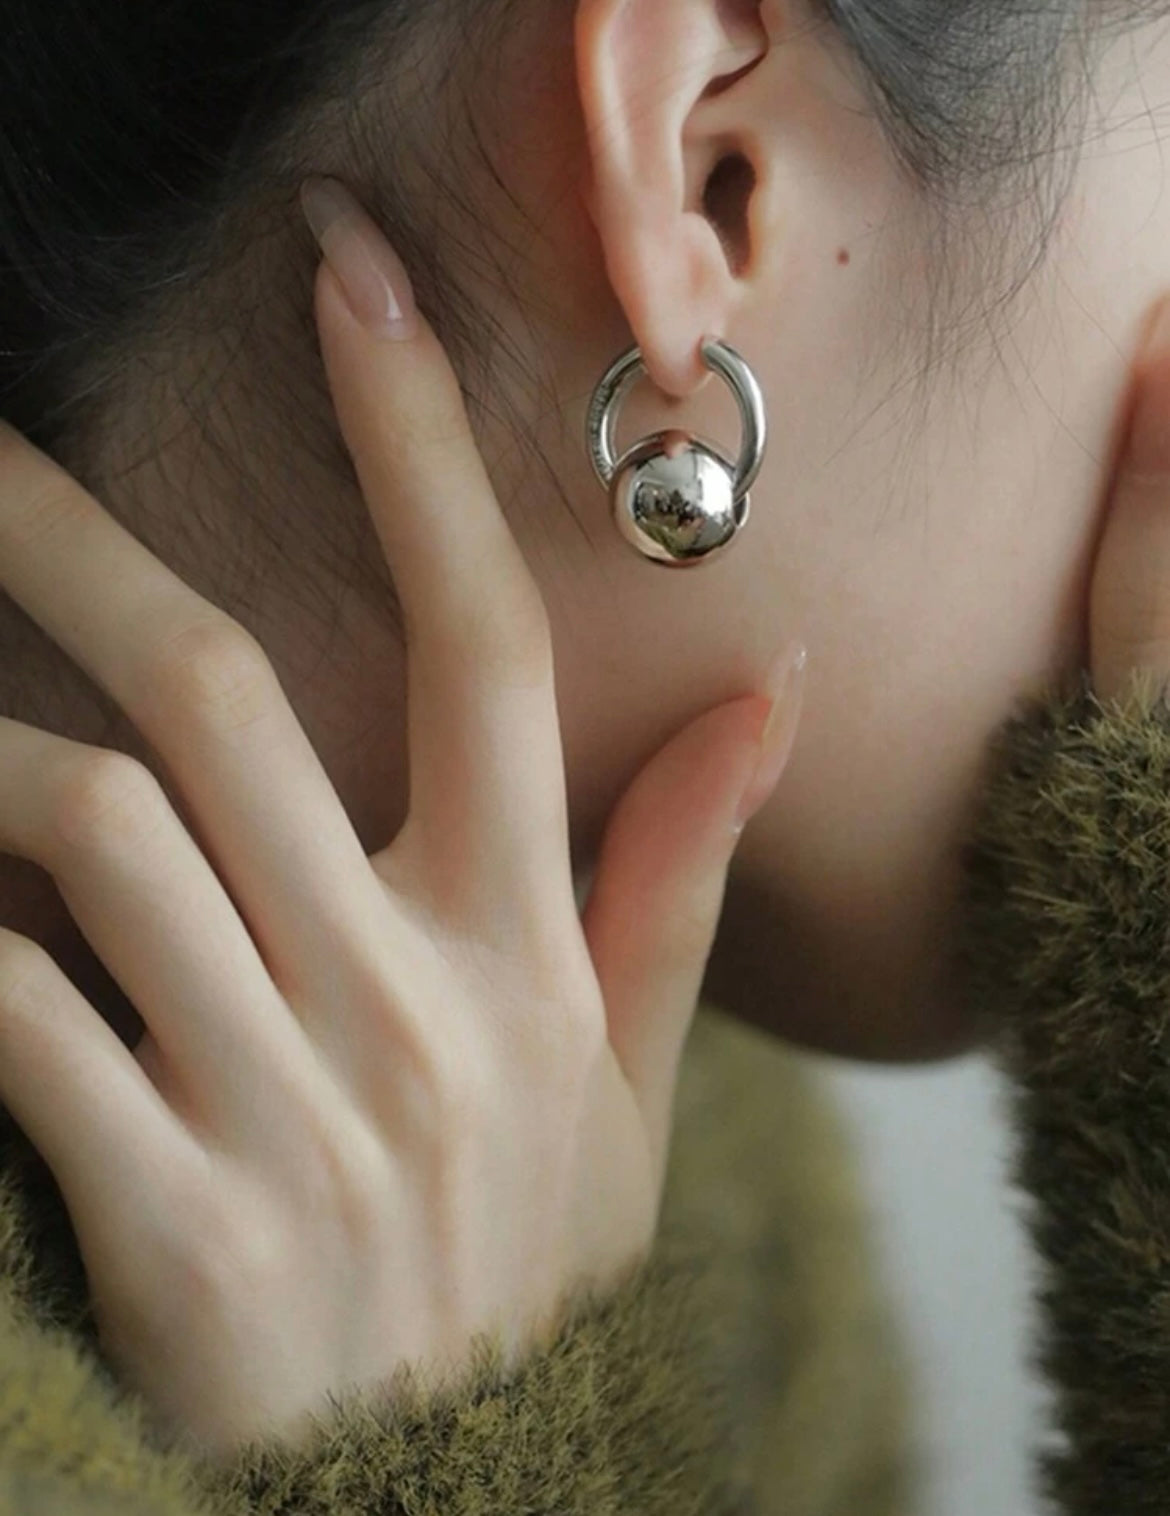 The Orion earrings